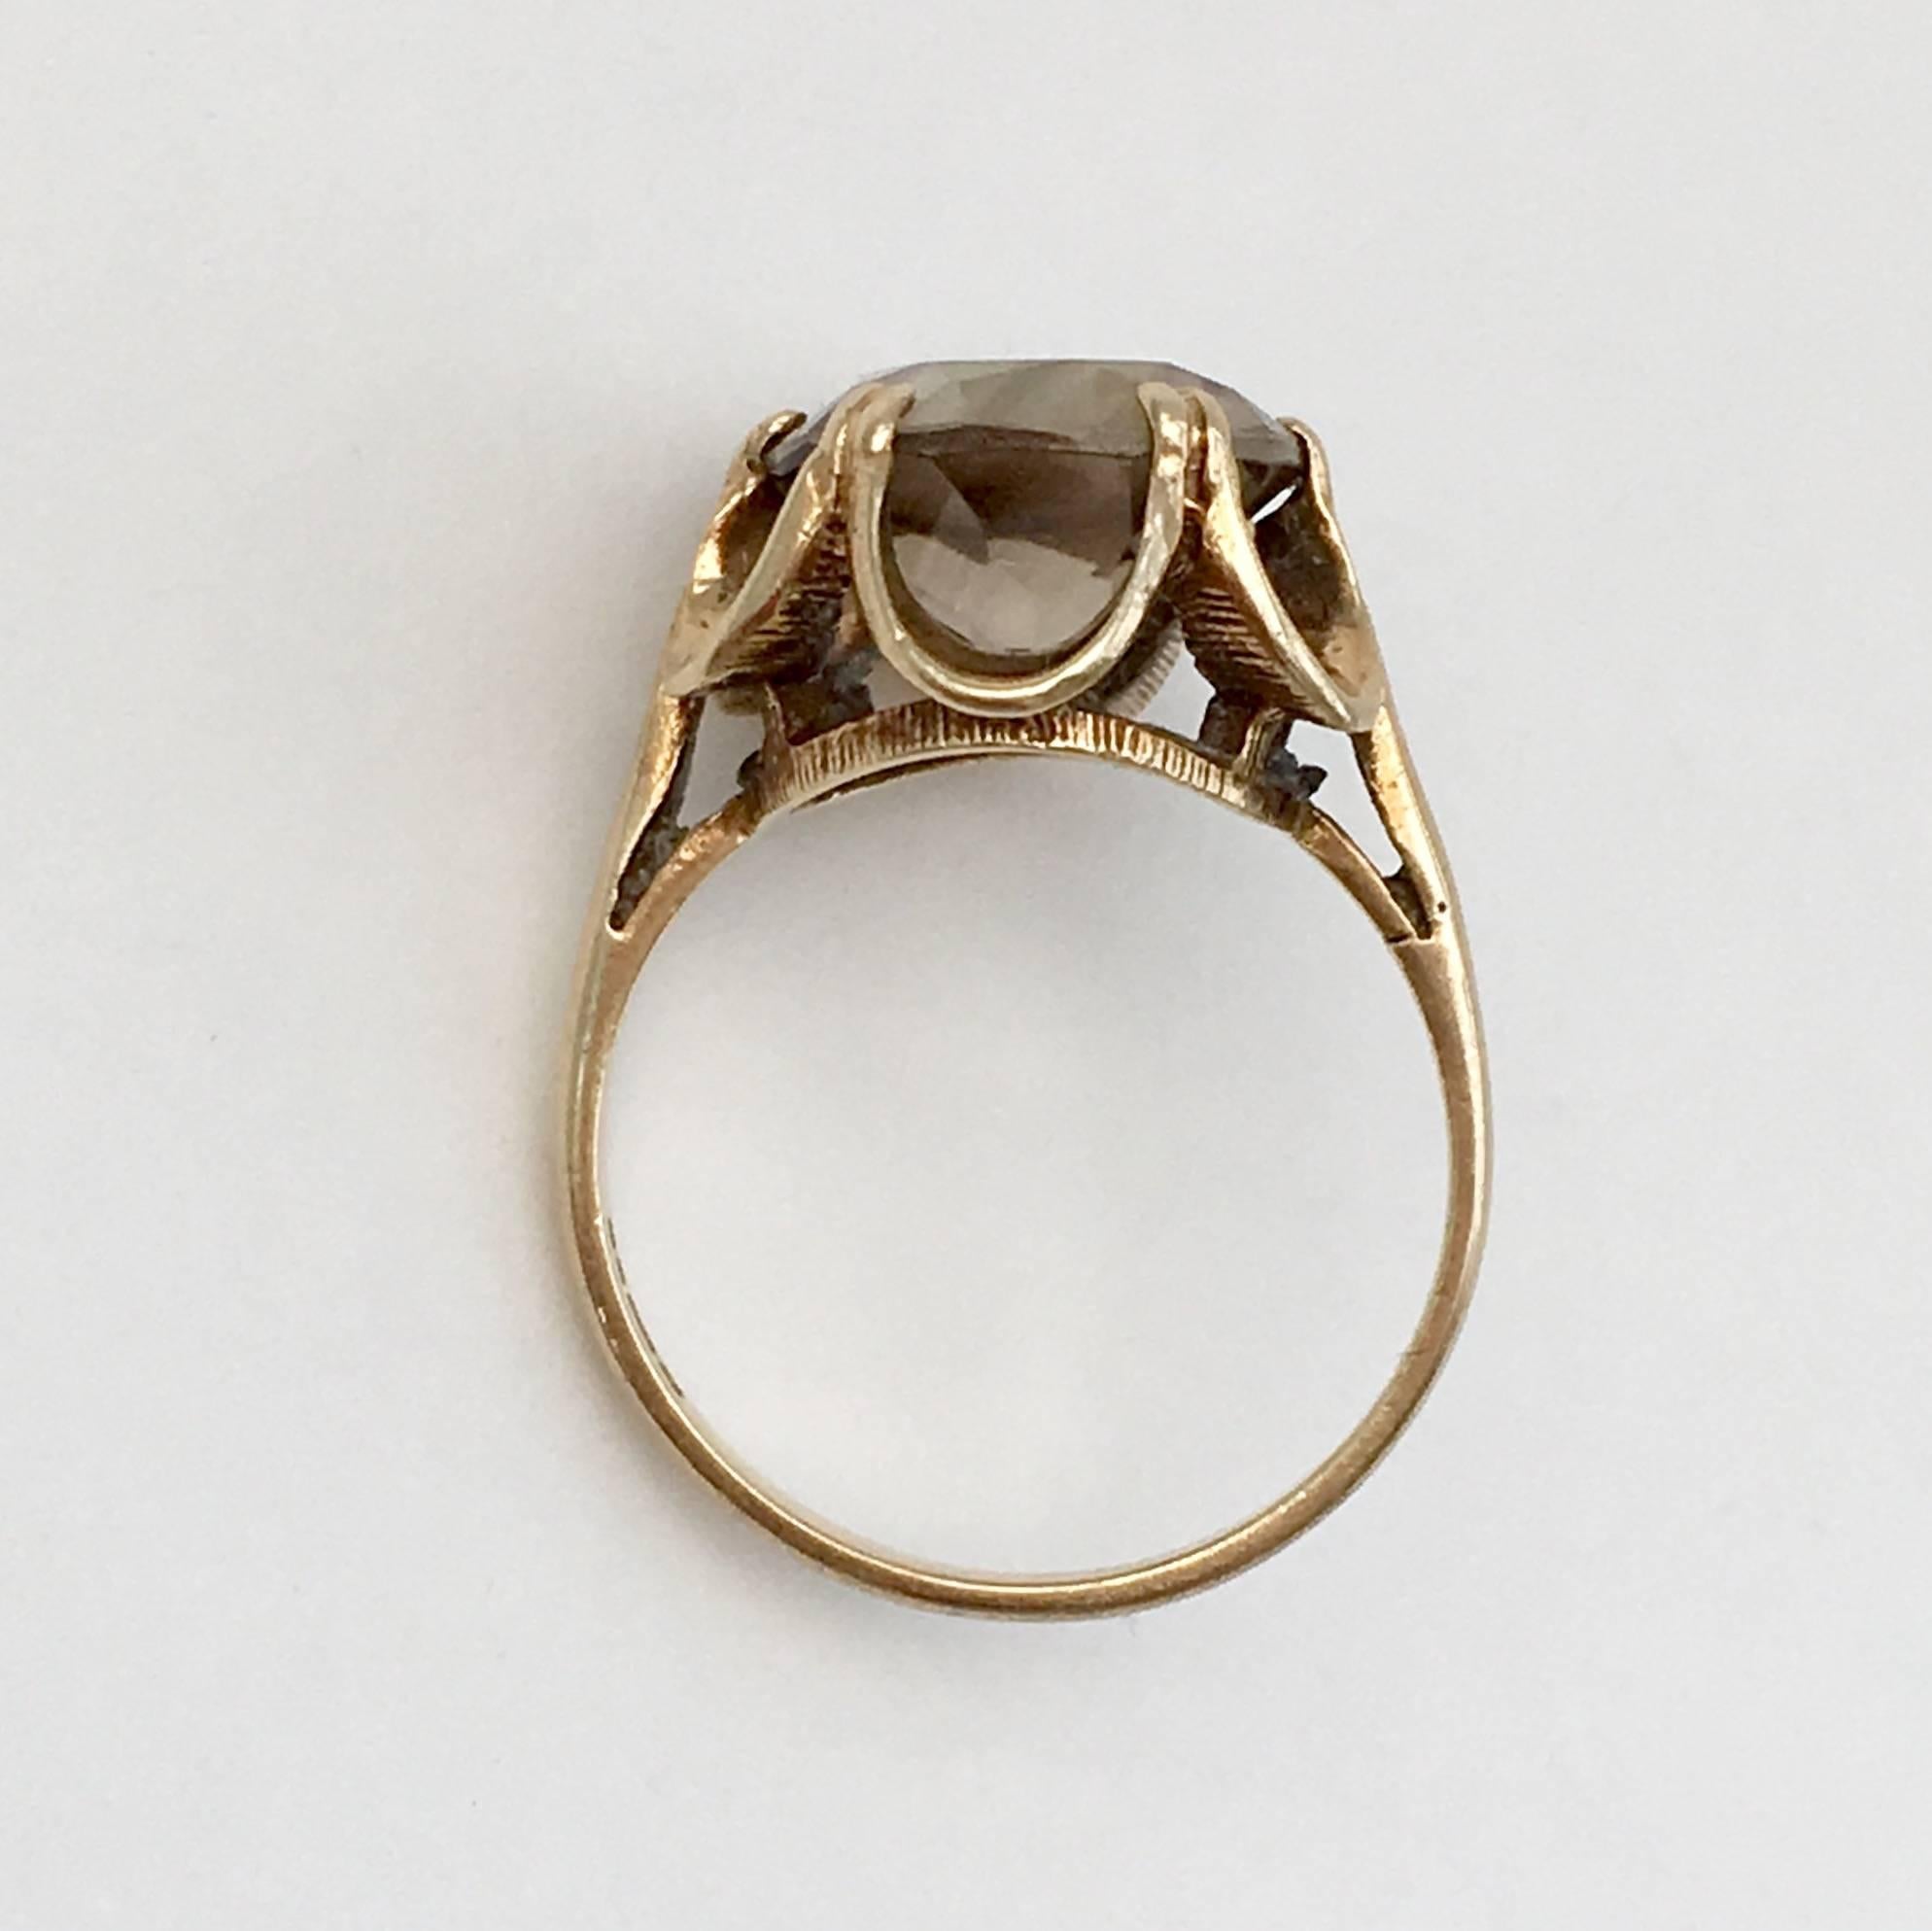 Modernist 1970s Gemstone Rings Flower Smoky Quartz Cocktail Ring Gold Vintage Jewelry